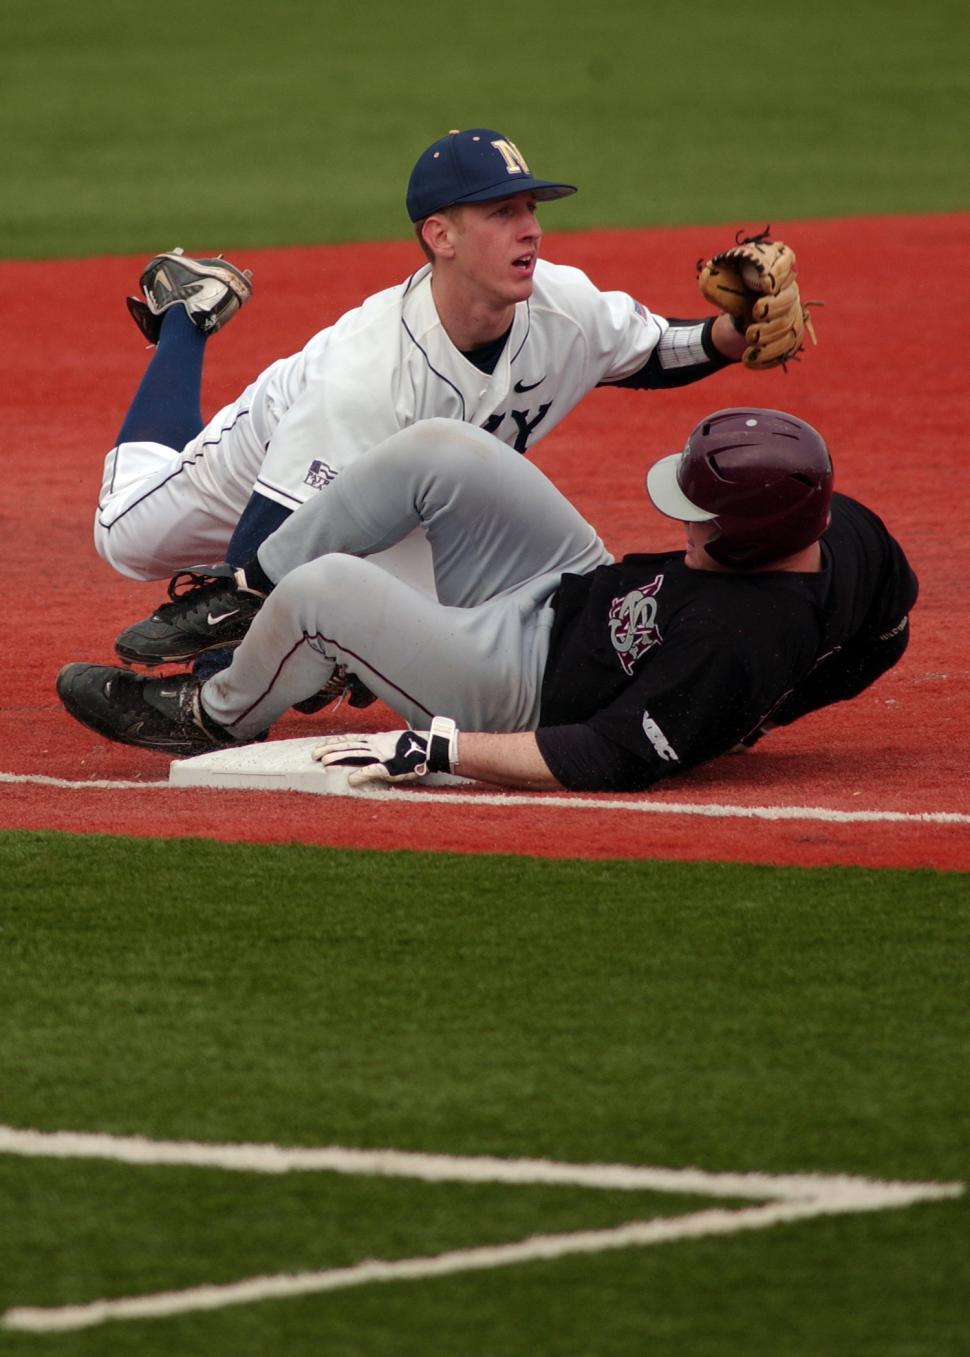 Free Image of Baseball Player Sliding Into Base on Field 